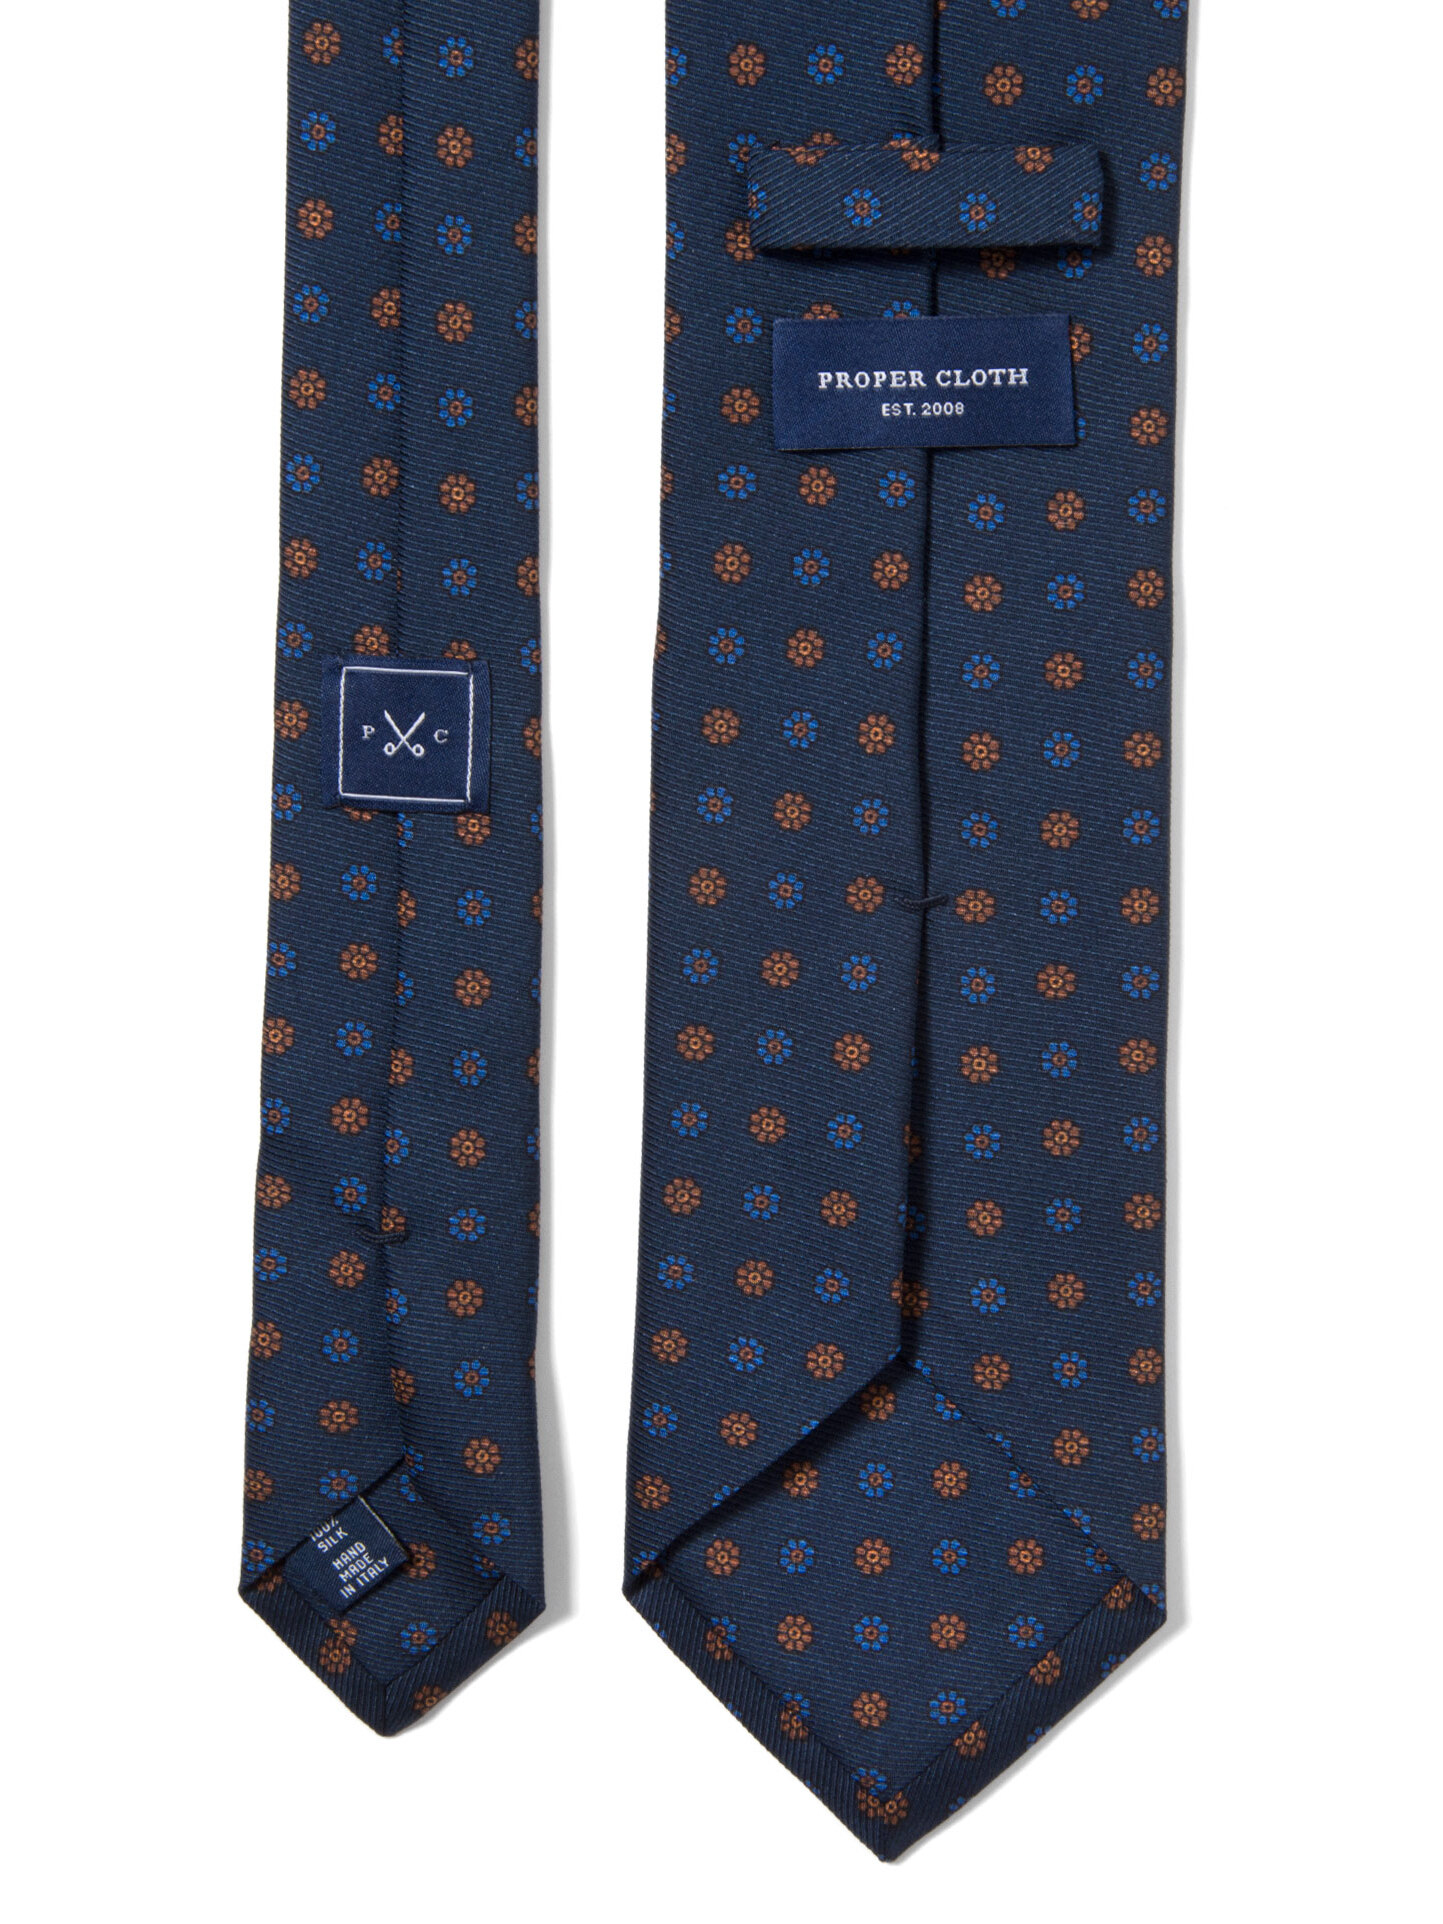 Vicenza Navy Print Tie by Proper Cloth